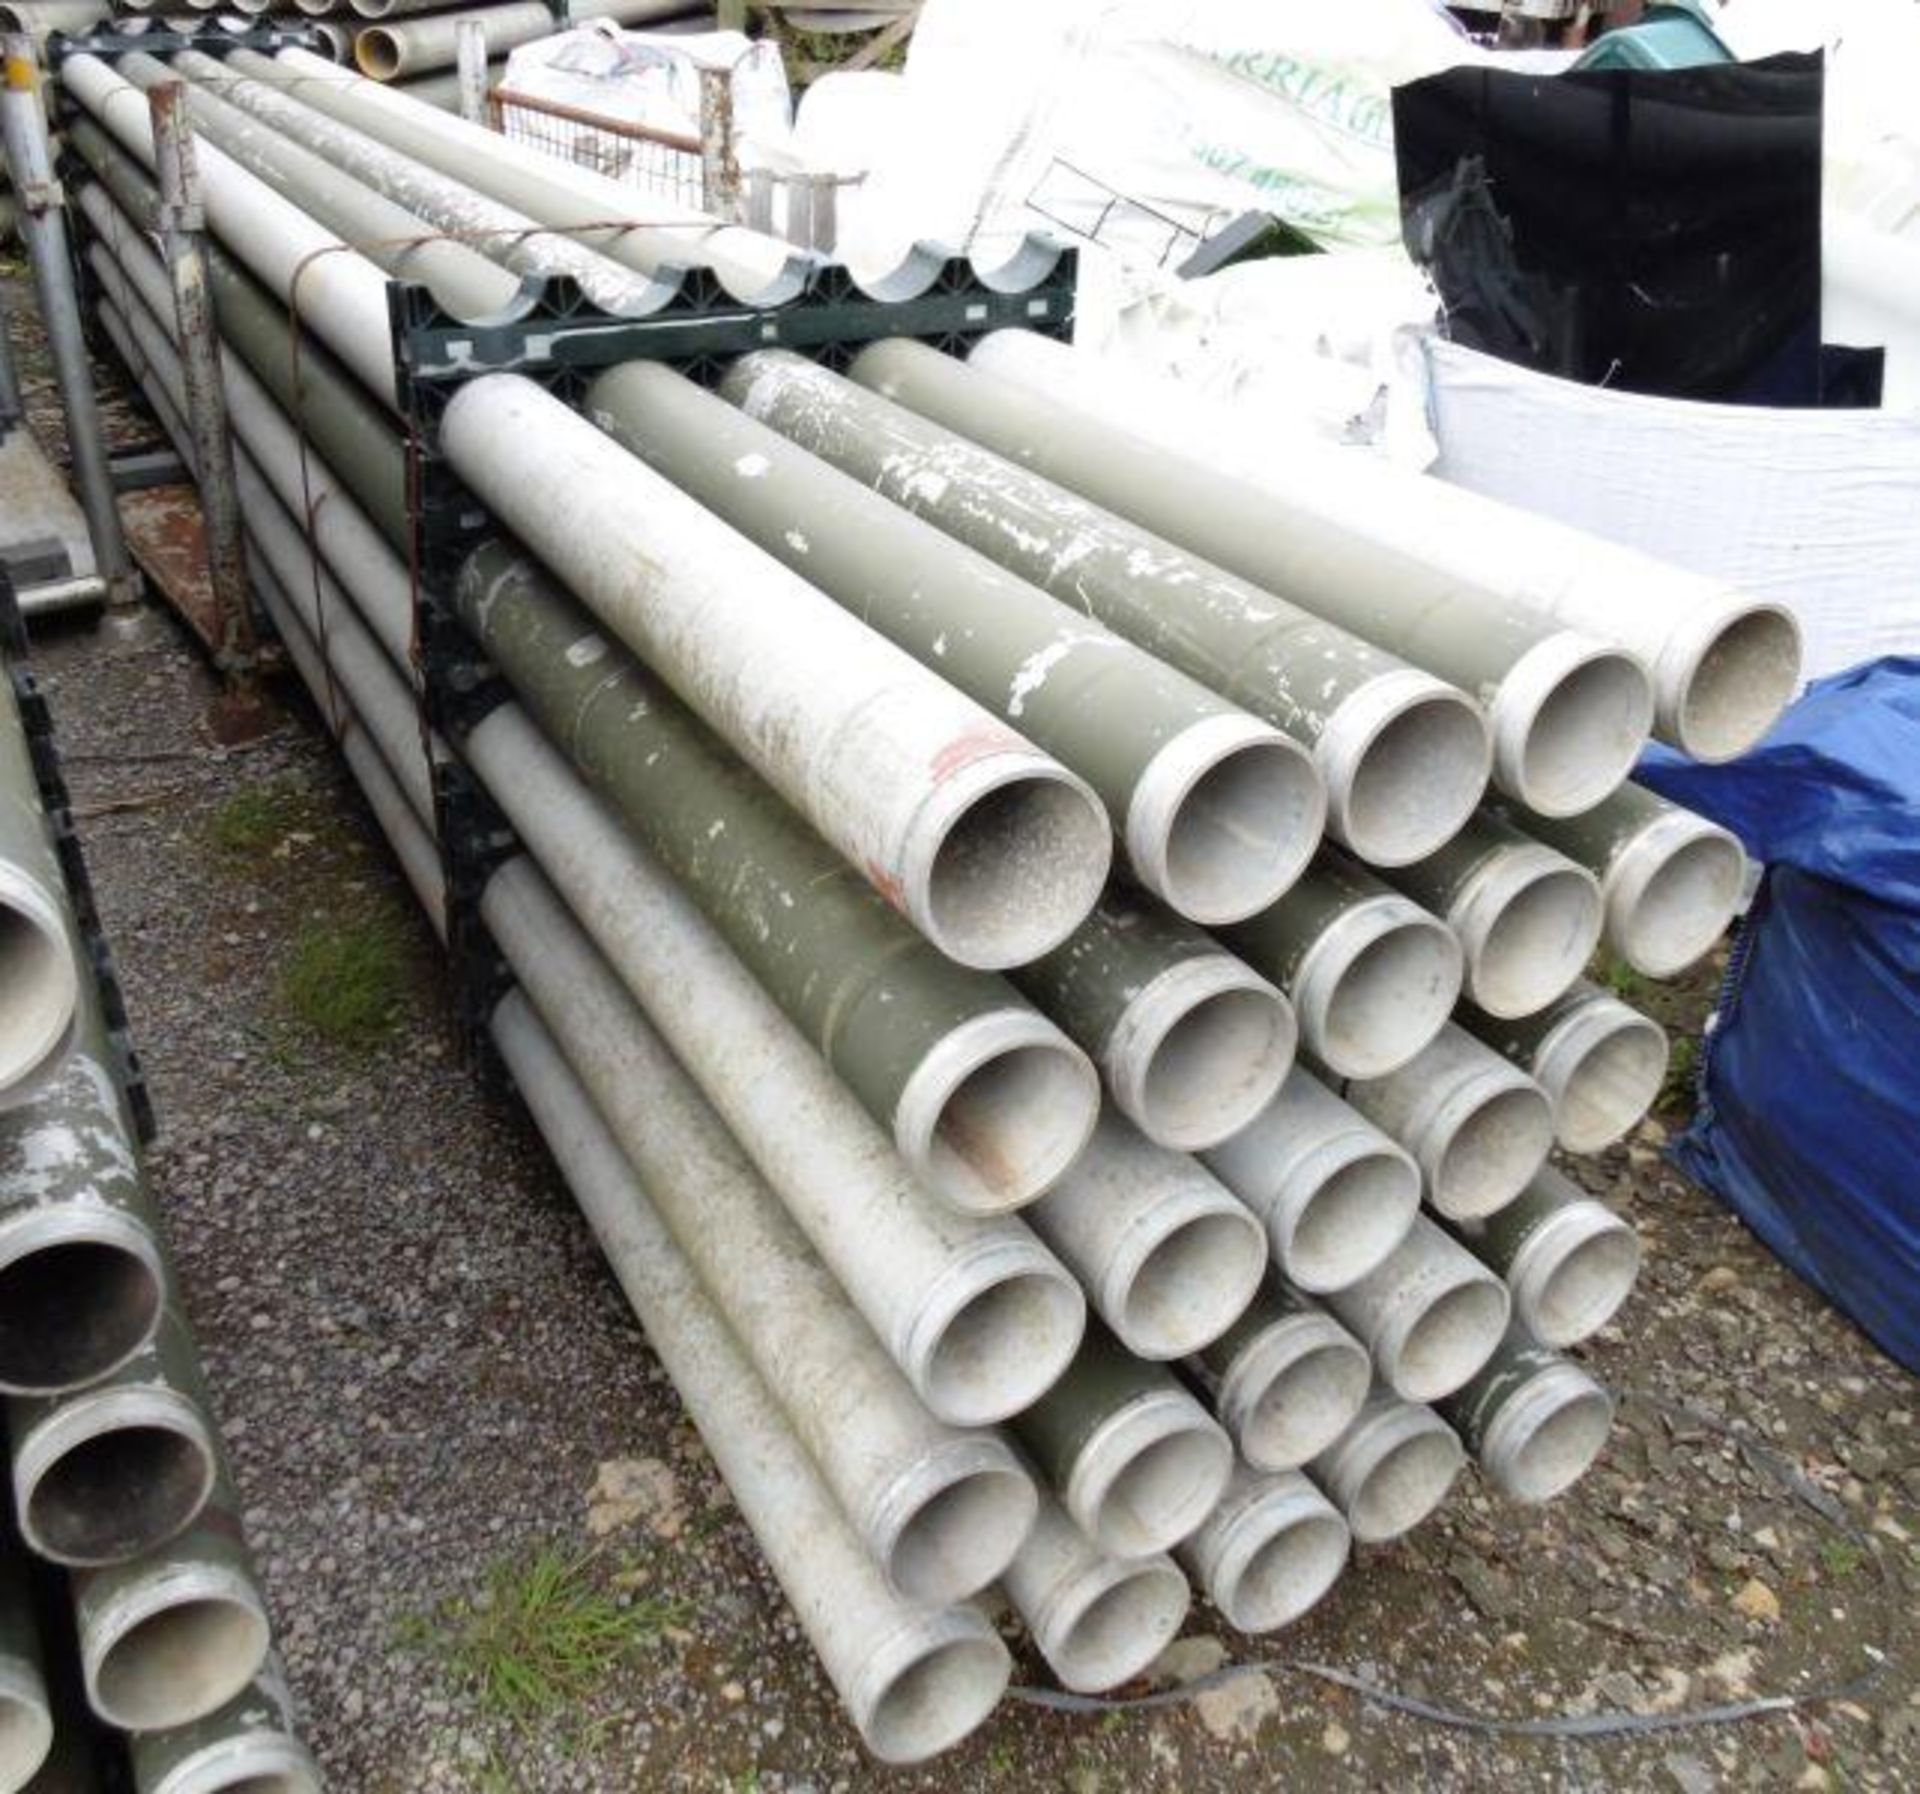 * 25 x Ex MOD aluminium fuel pipes, 4'' (101mm) diameter, 6000mm long, approx 7mm thick wall (